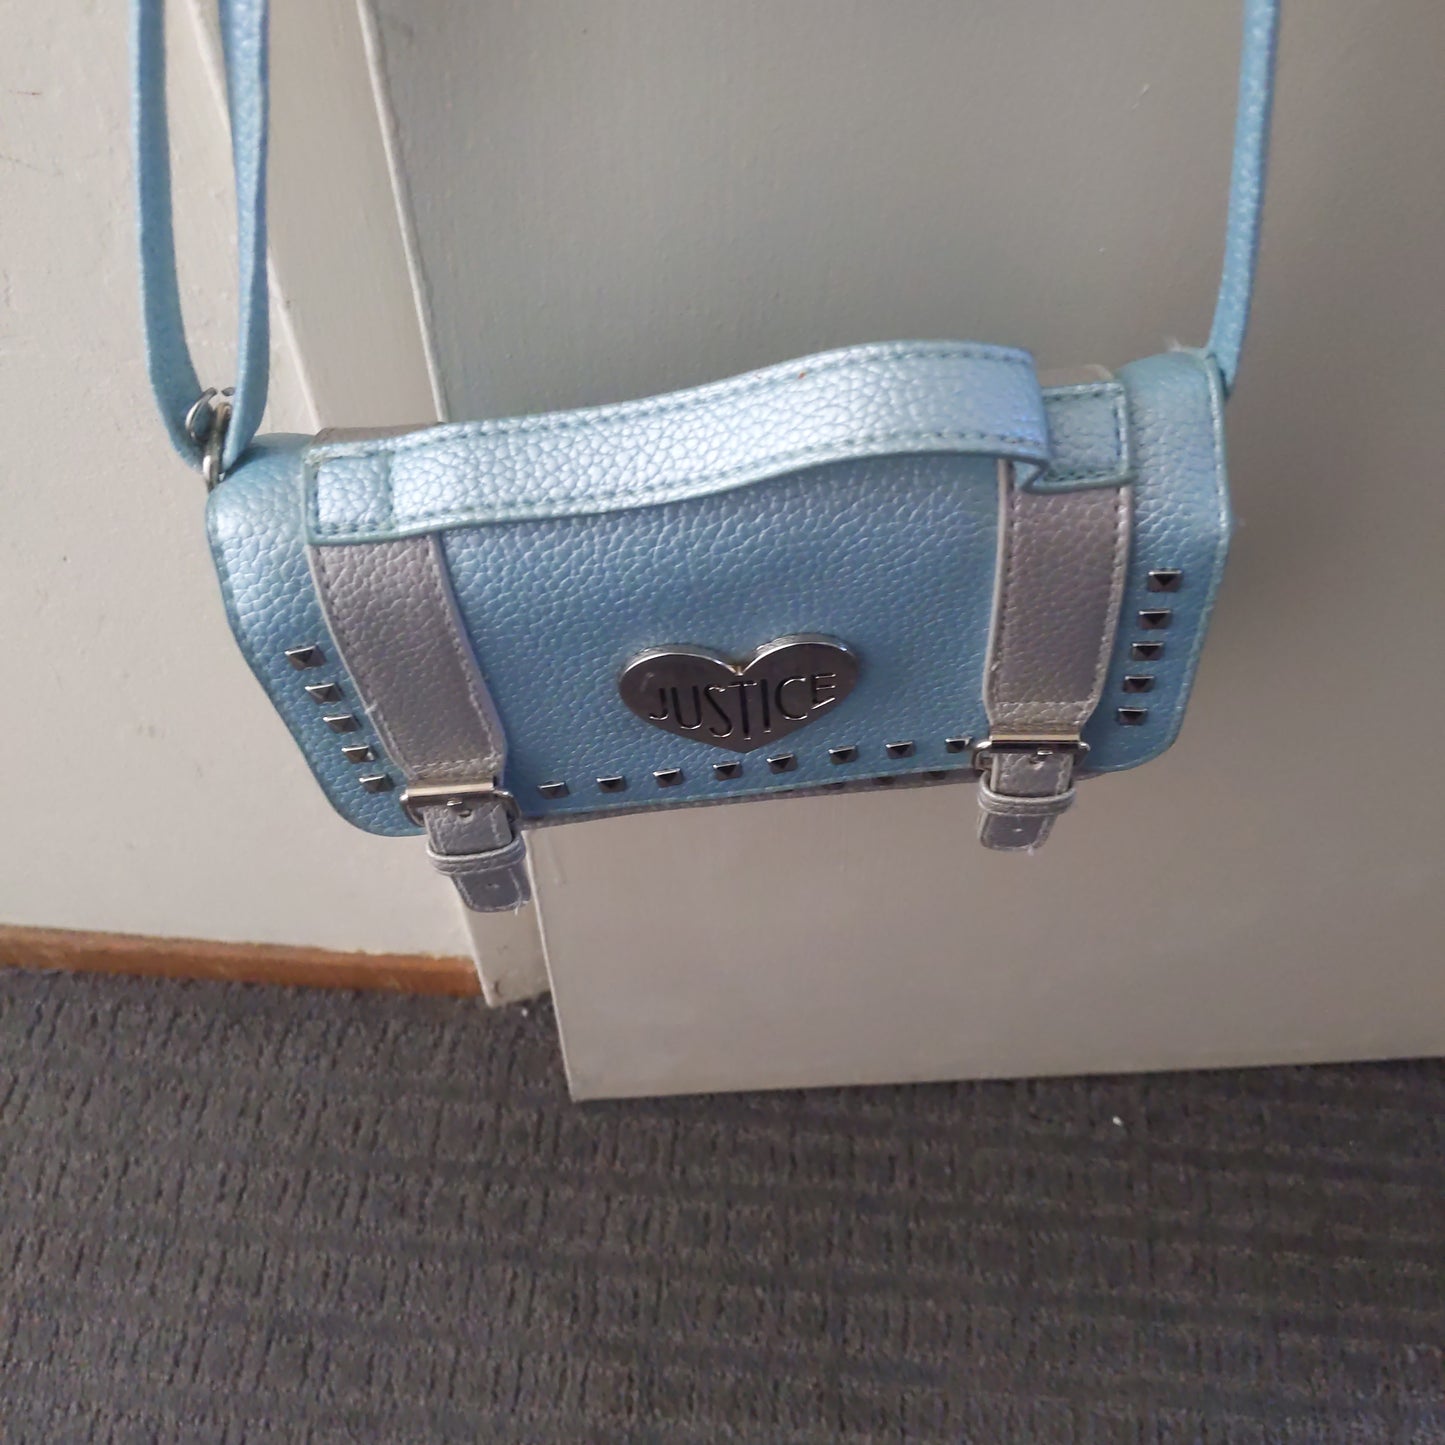 Blue and Gray Justice Small Handbag